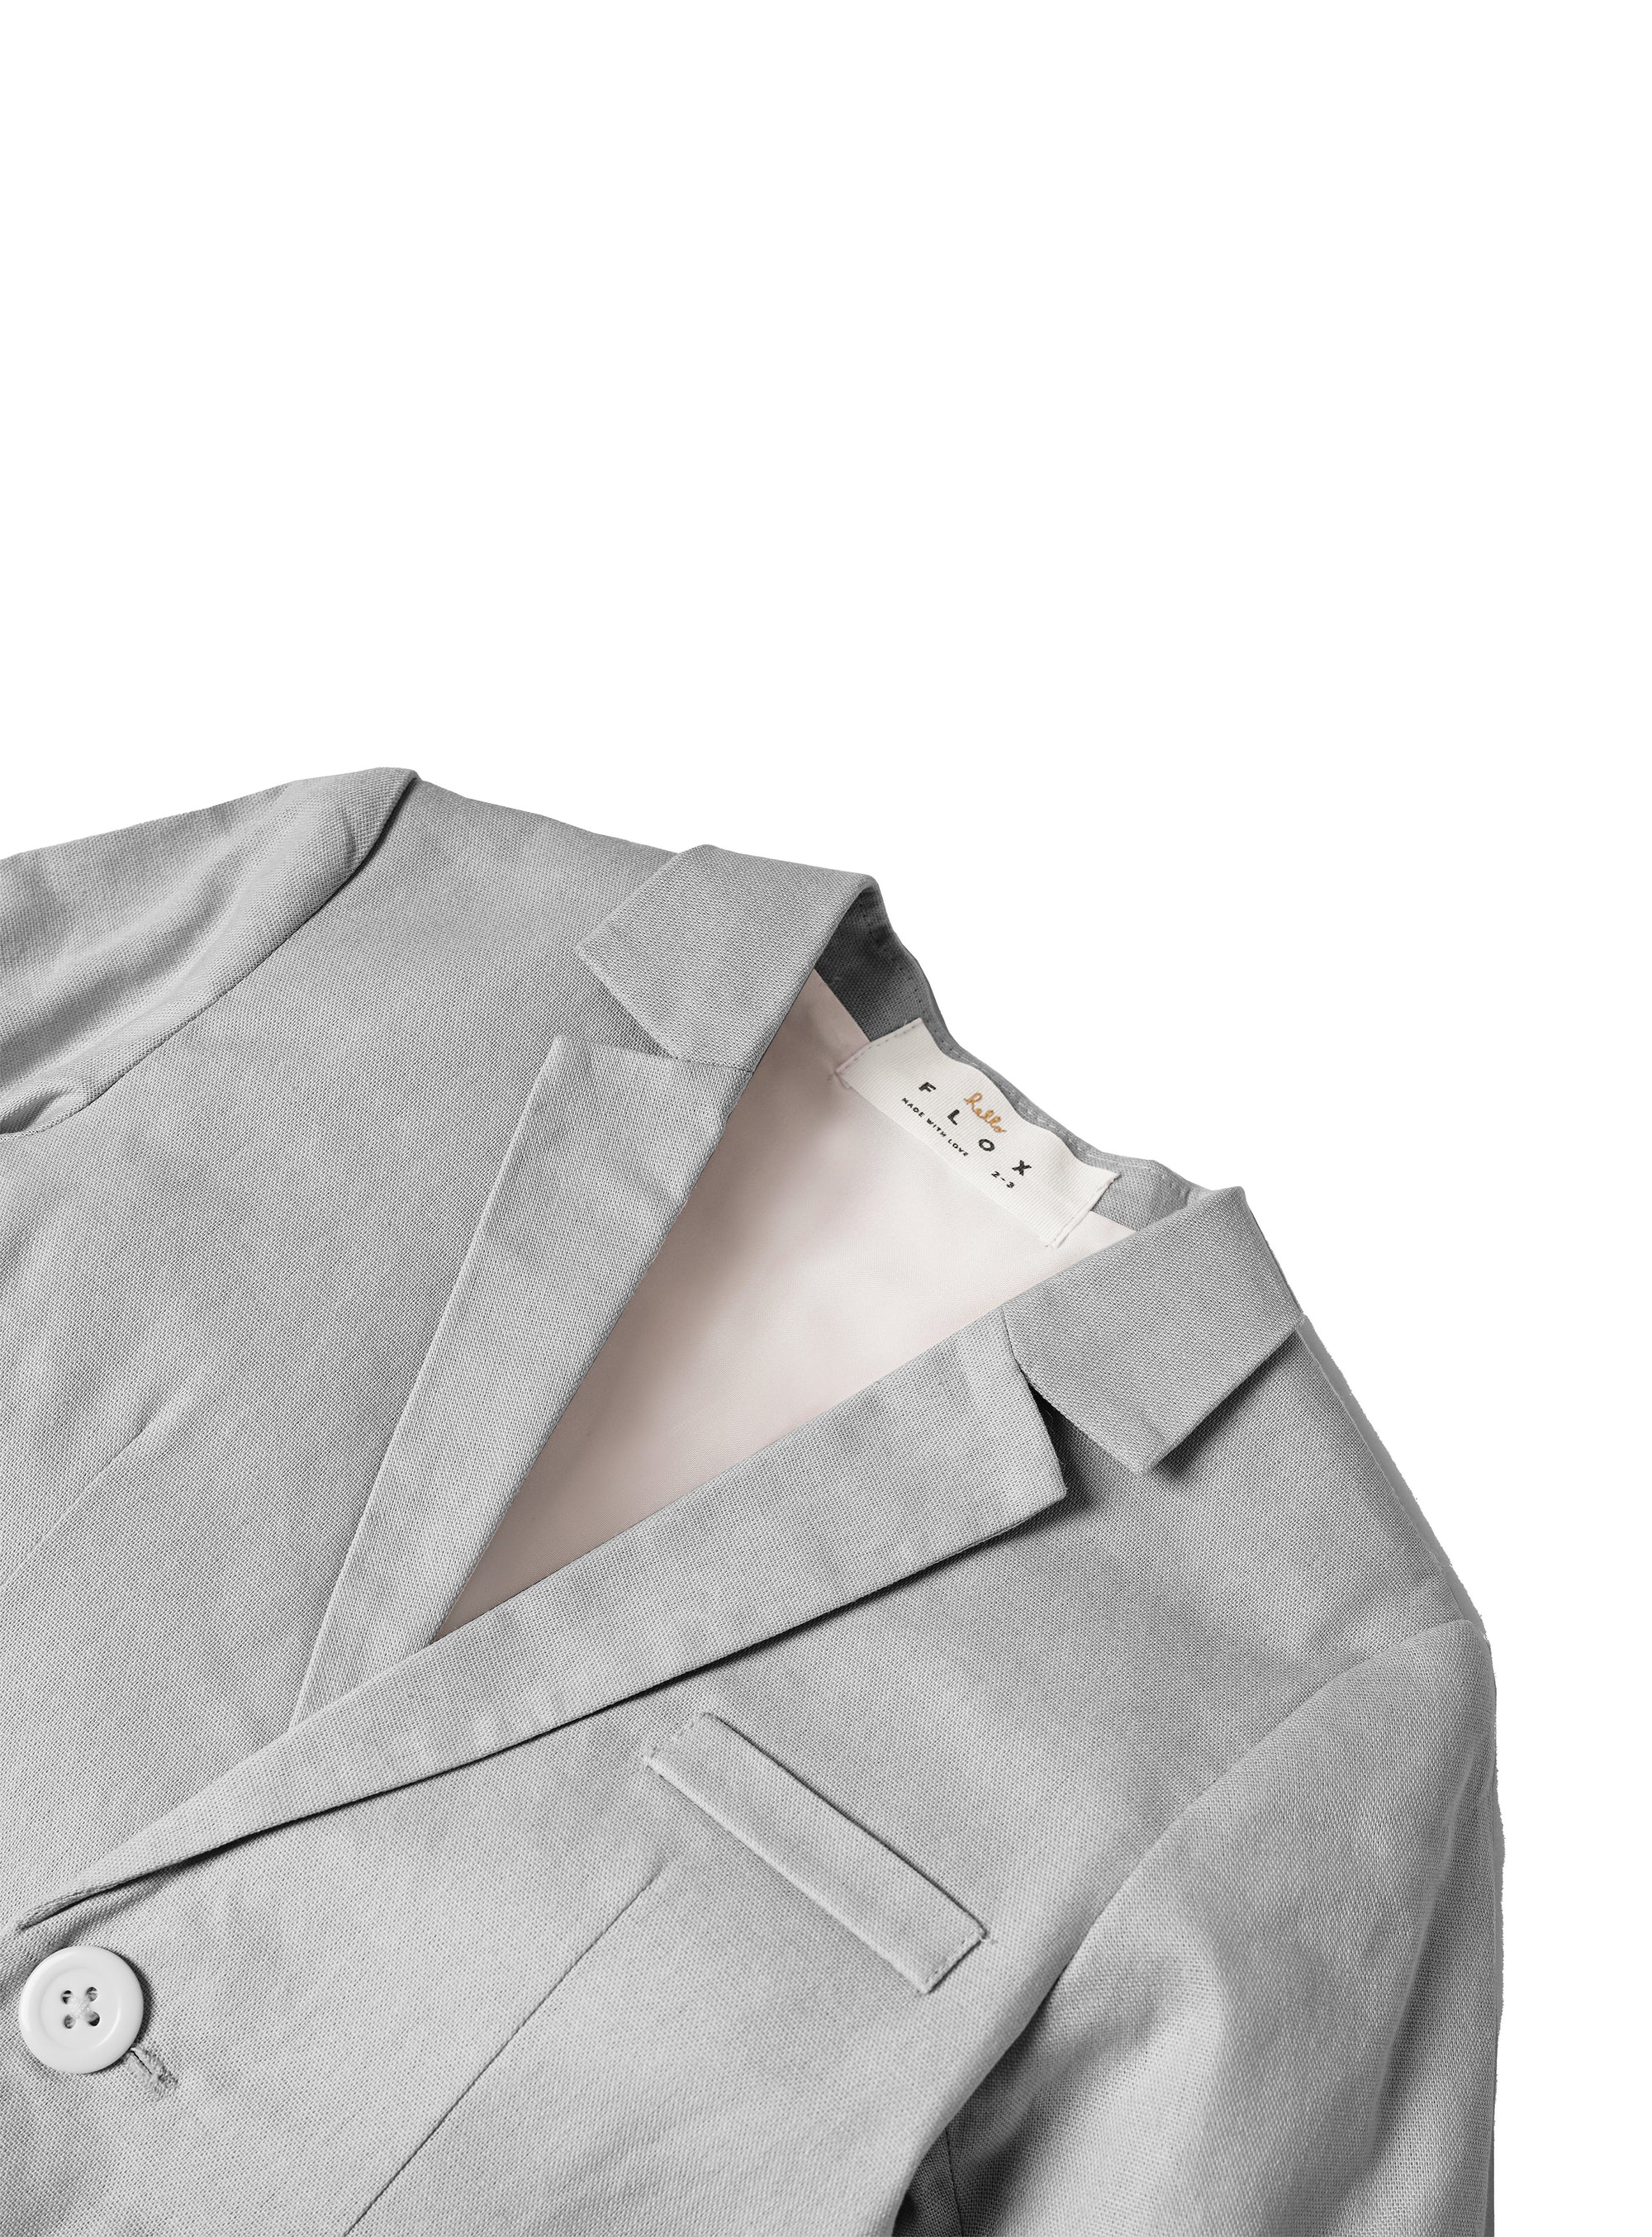 platinum gray blazer with gray button